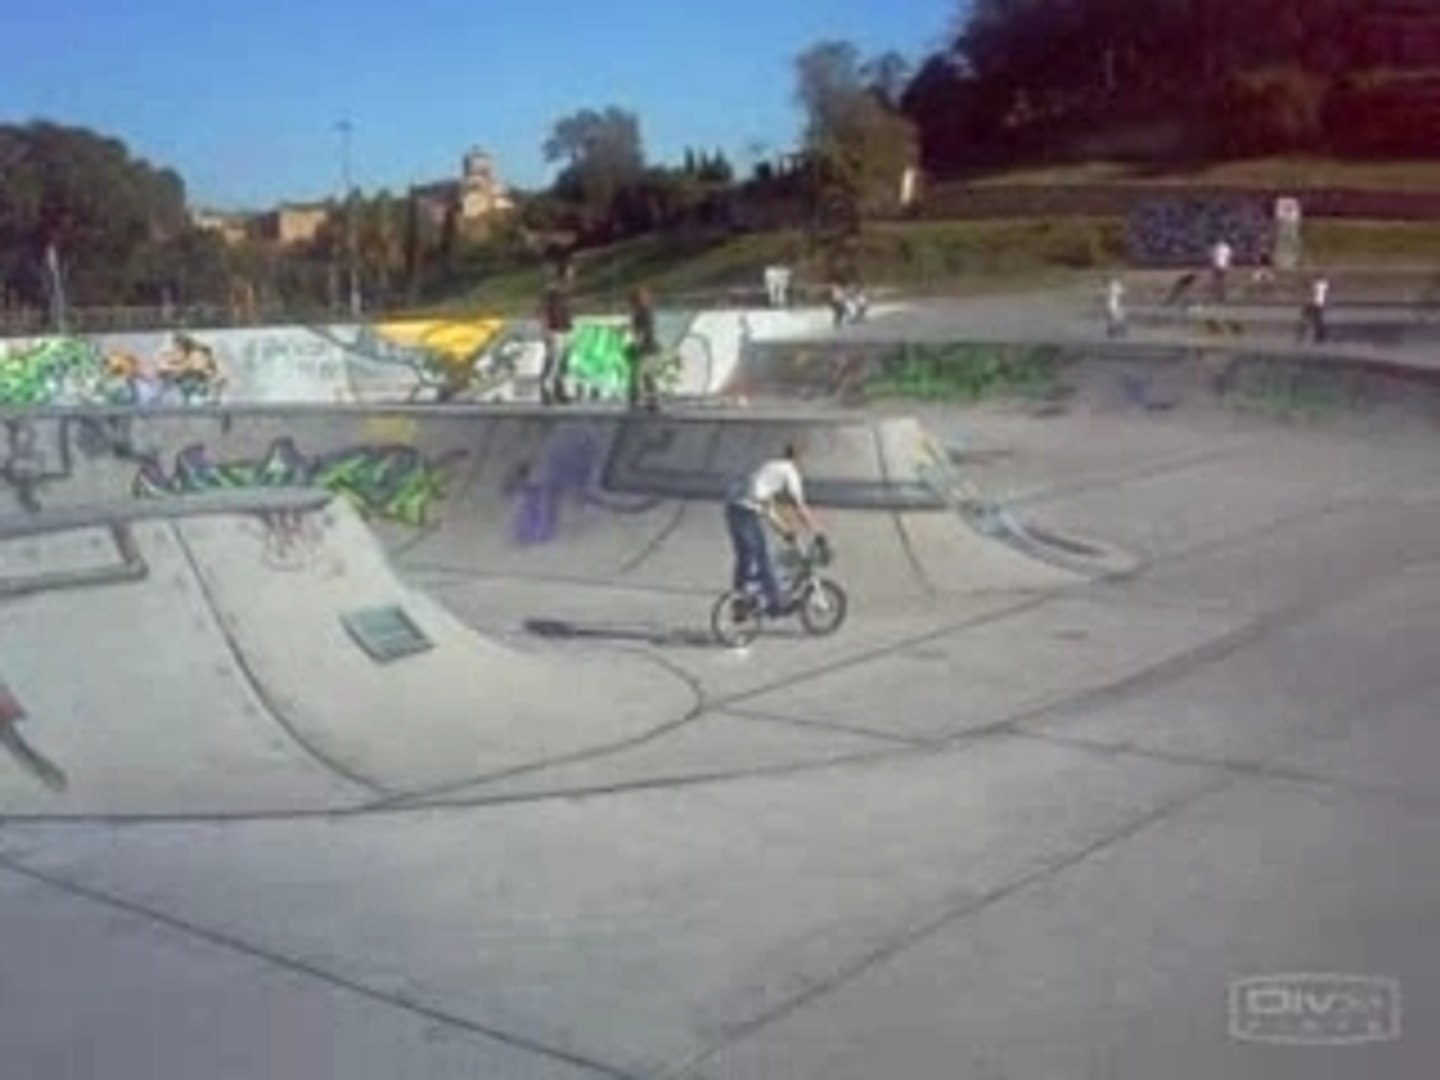 Skate park poussan - Vidéo Dailymotion